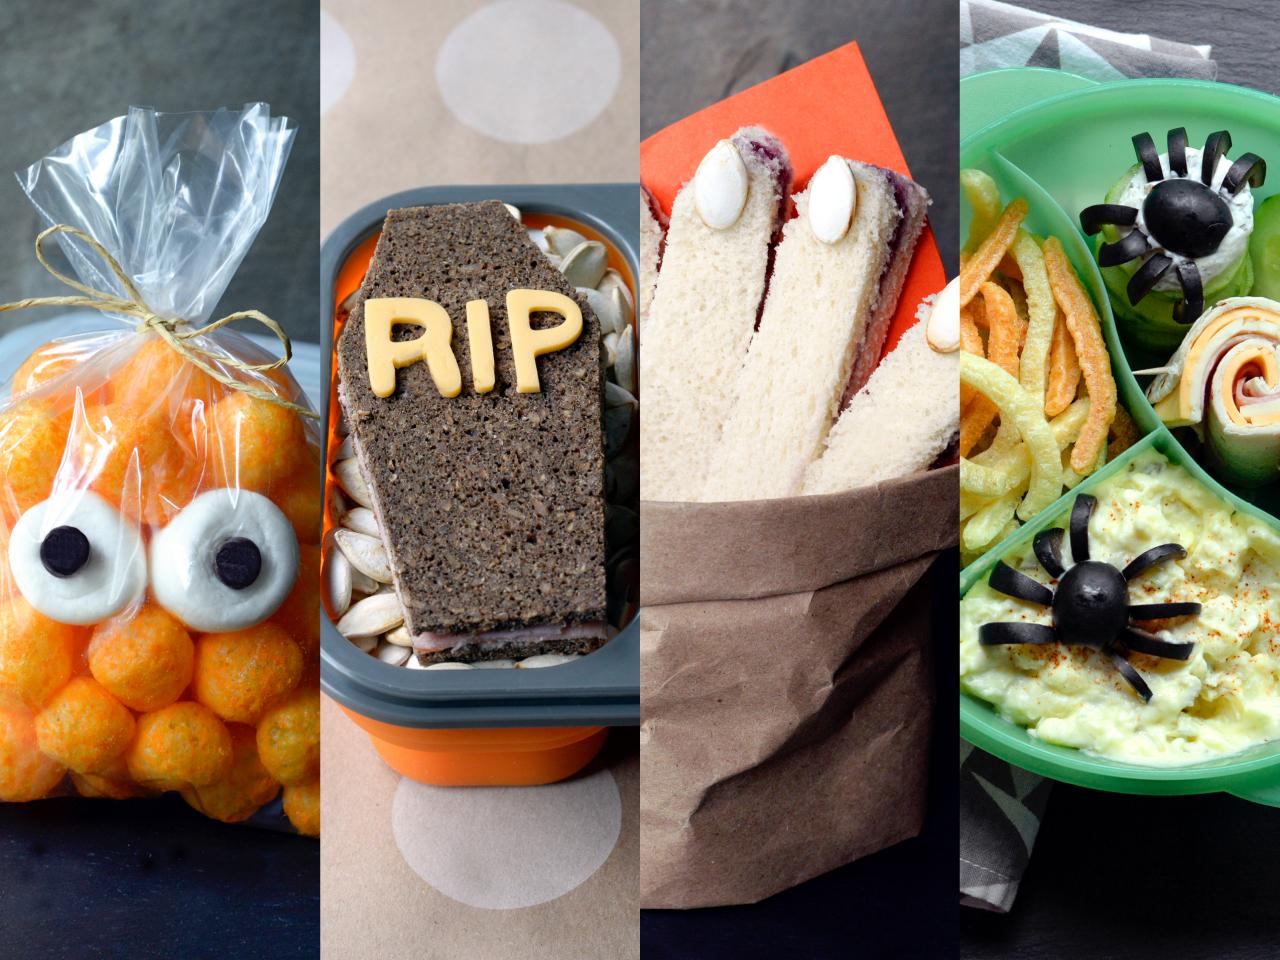 Fun Halloween Food Lunchbox Ideas - Family Fresh Meals